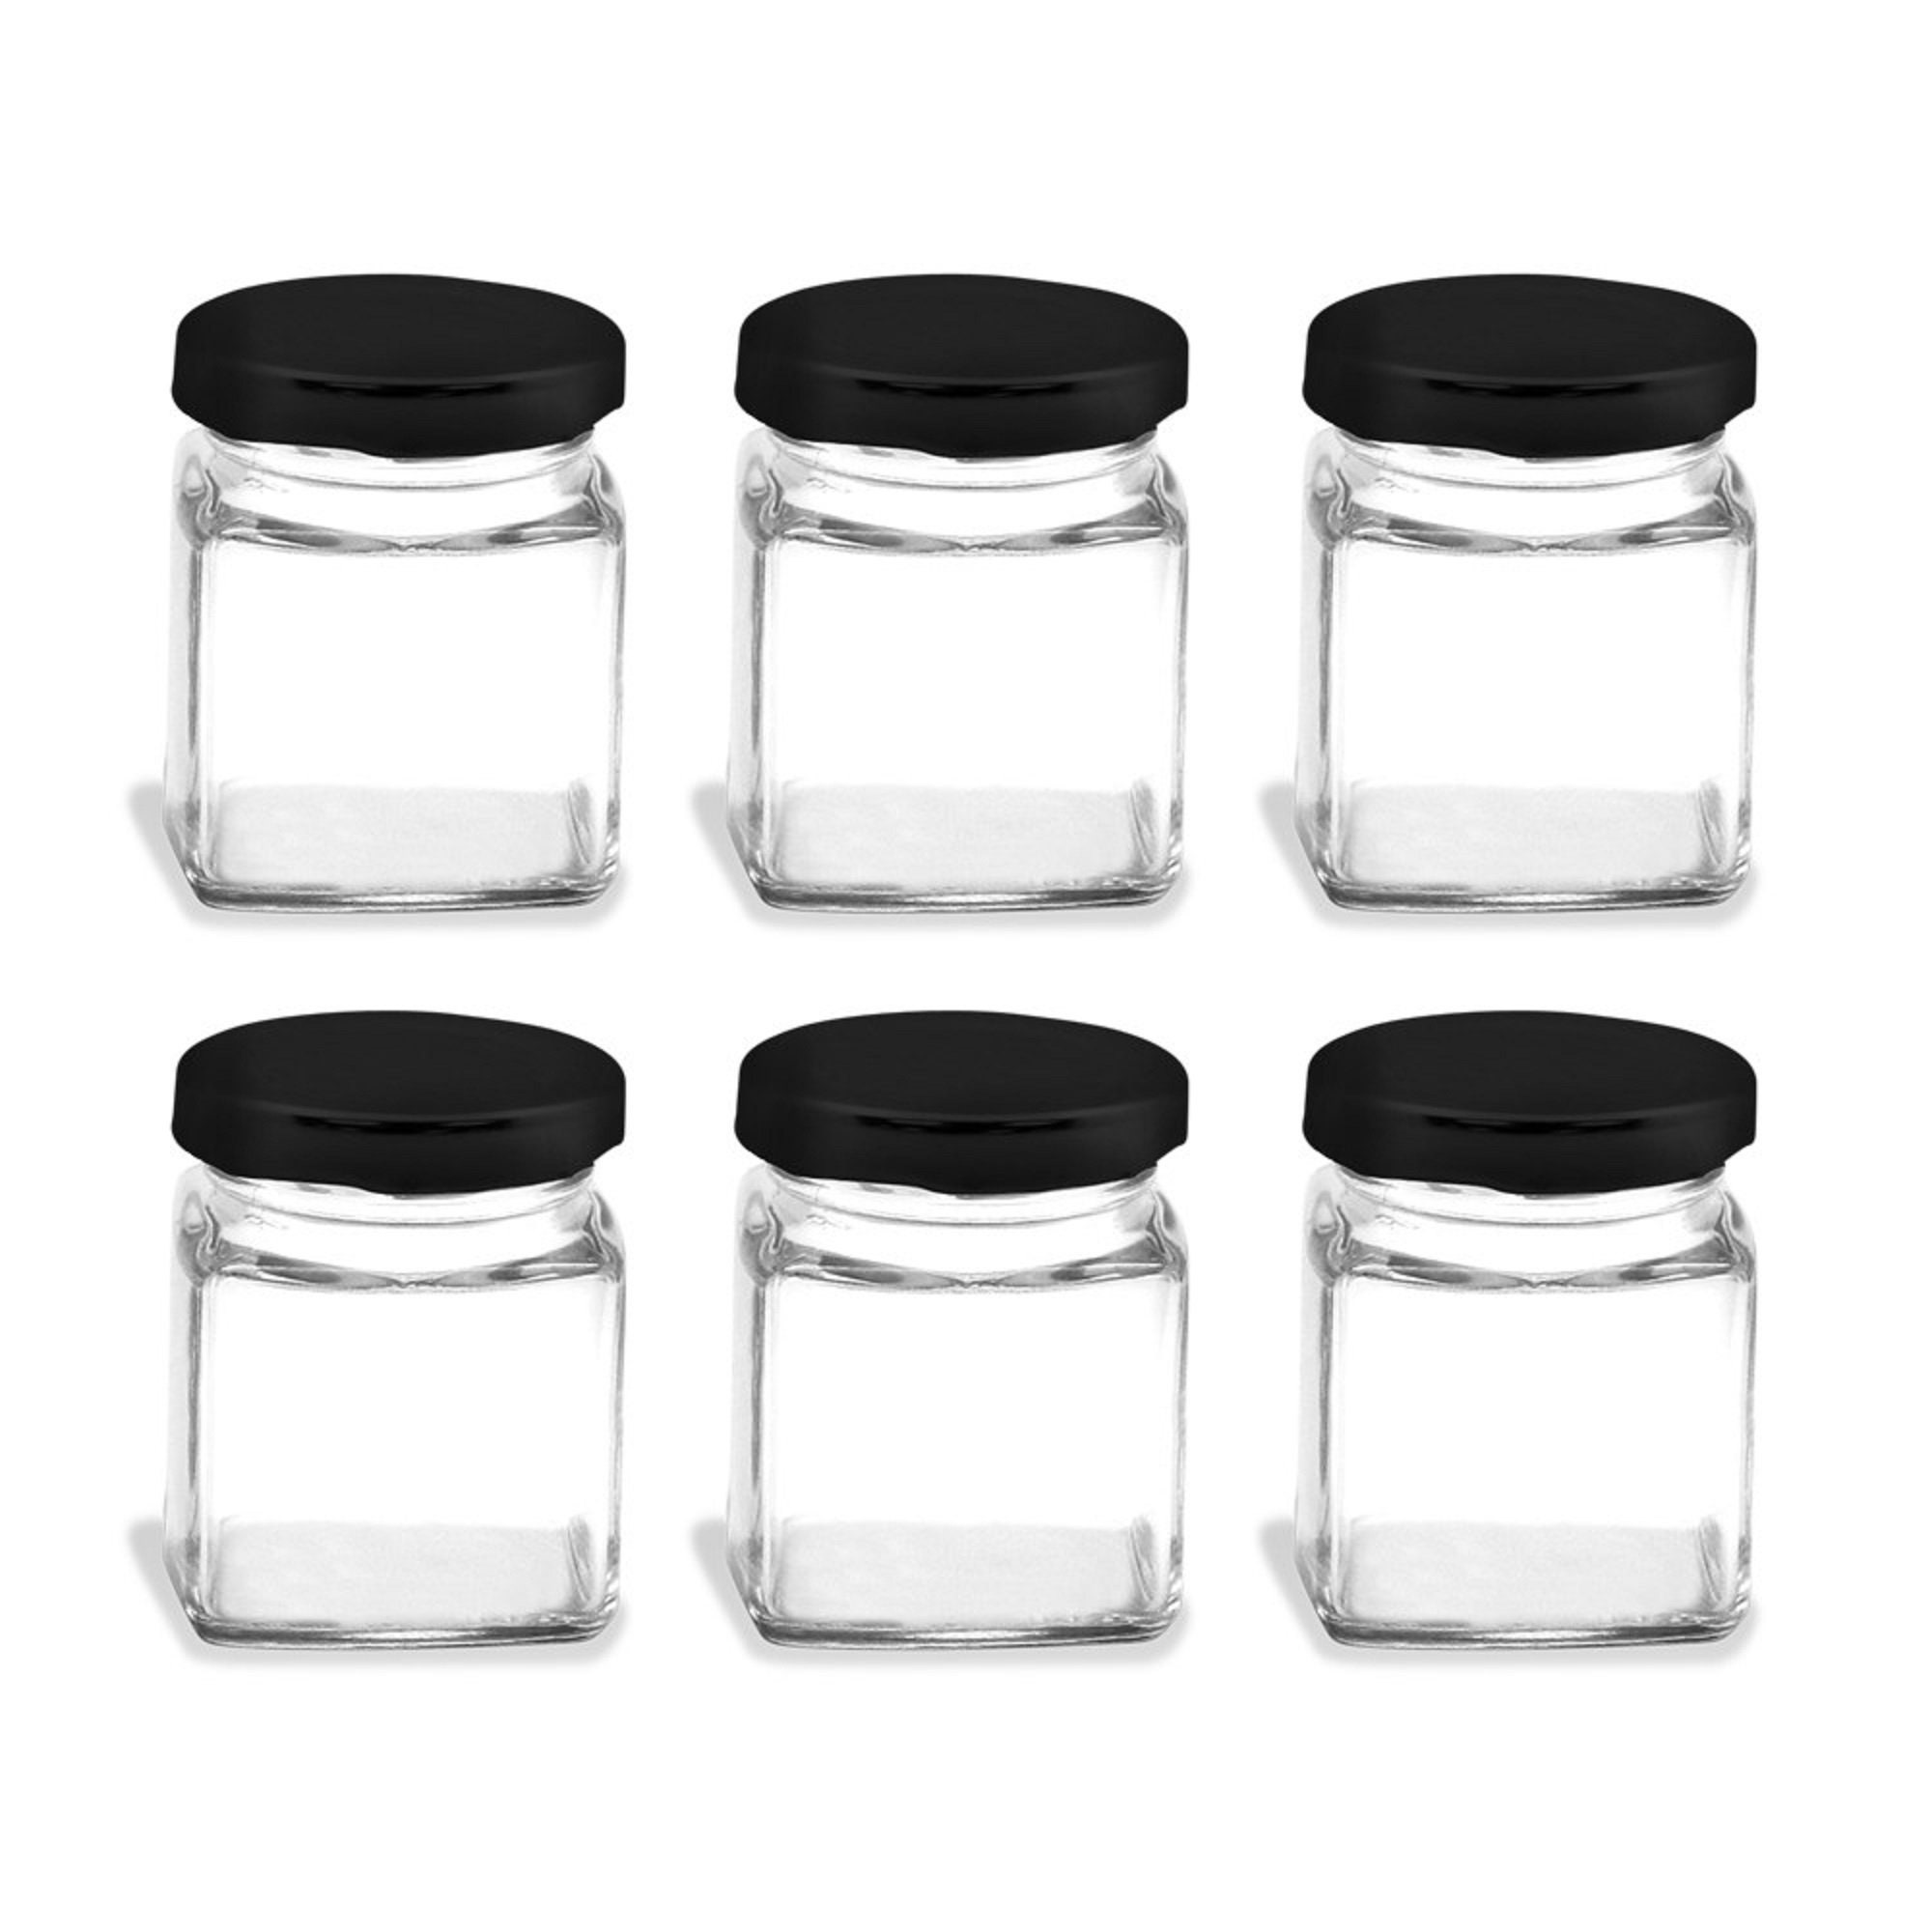 5oz Premium Glass Jars w/ Child Resistant Lids - Black Lid (120 Qty)